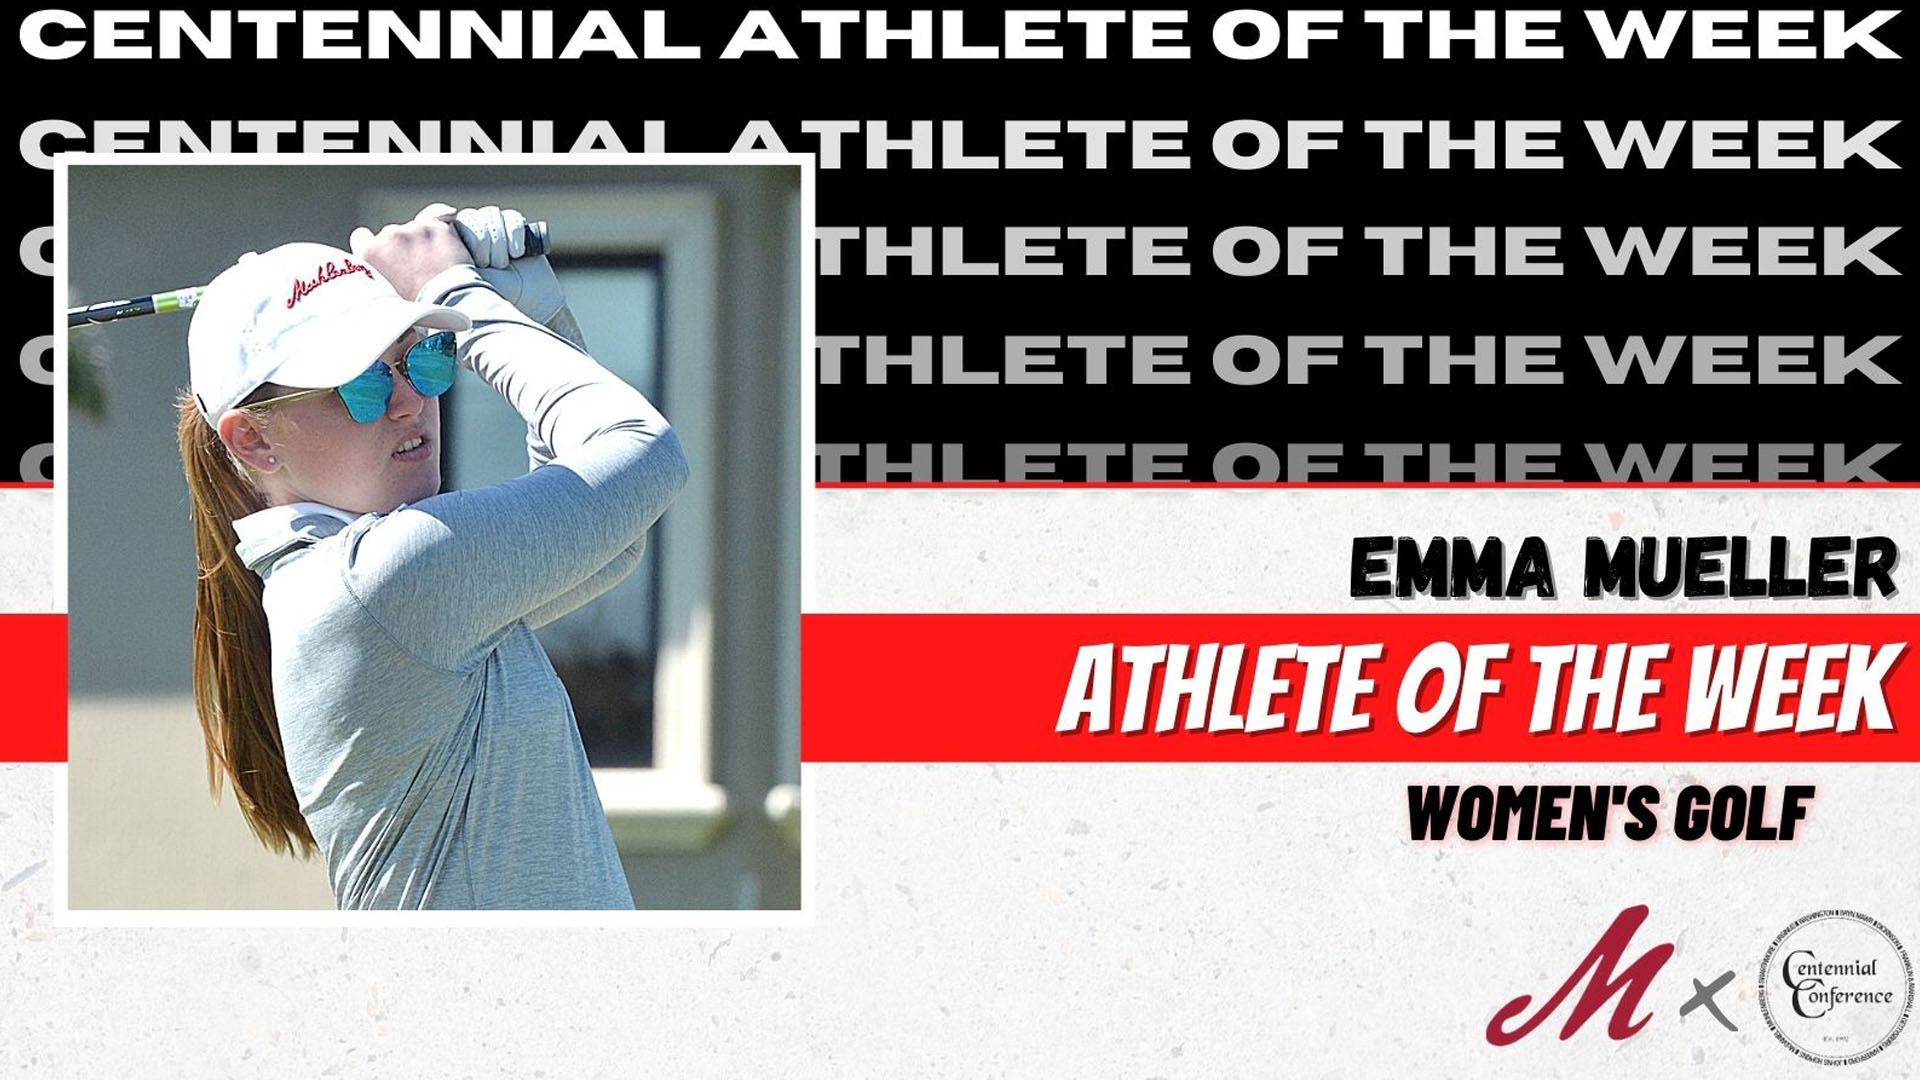 Muhlenberg's Emma Mueller Secures Women's Golf Weekly Award